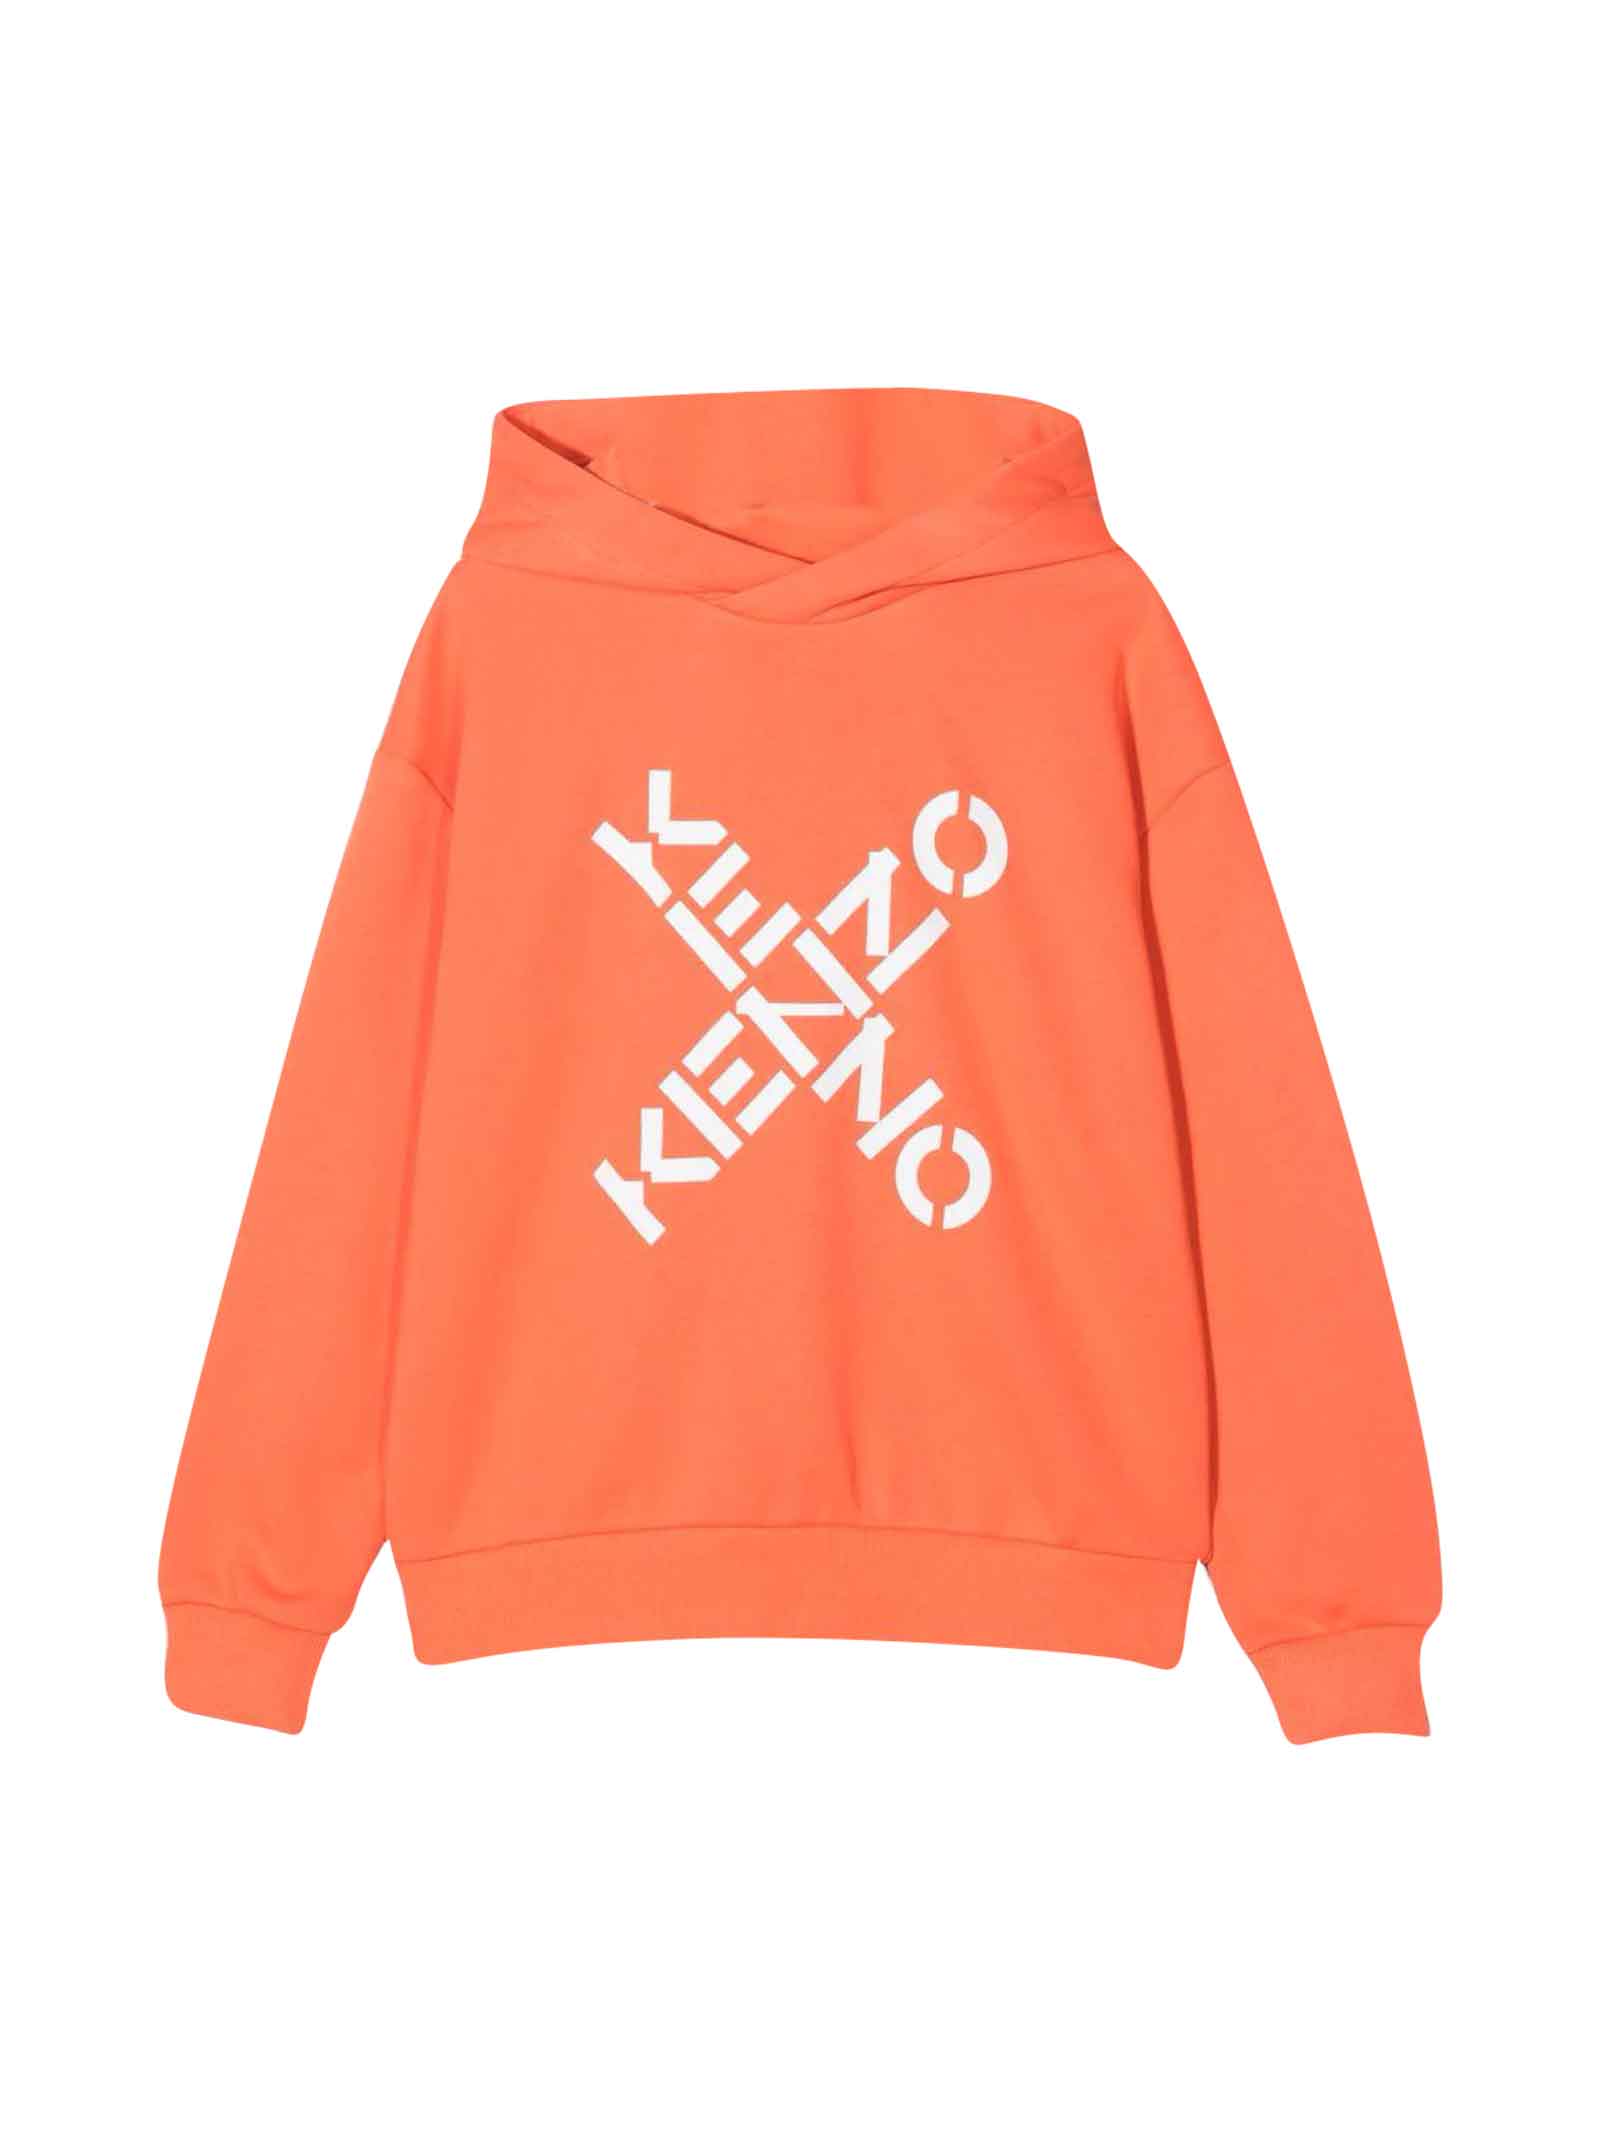 Kenzo Kids Orange Boy Sweatshirt With Logo Print On The Front, Hood, Long Sleeves, Elasticated Cuffs And Elasticated Hem By.